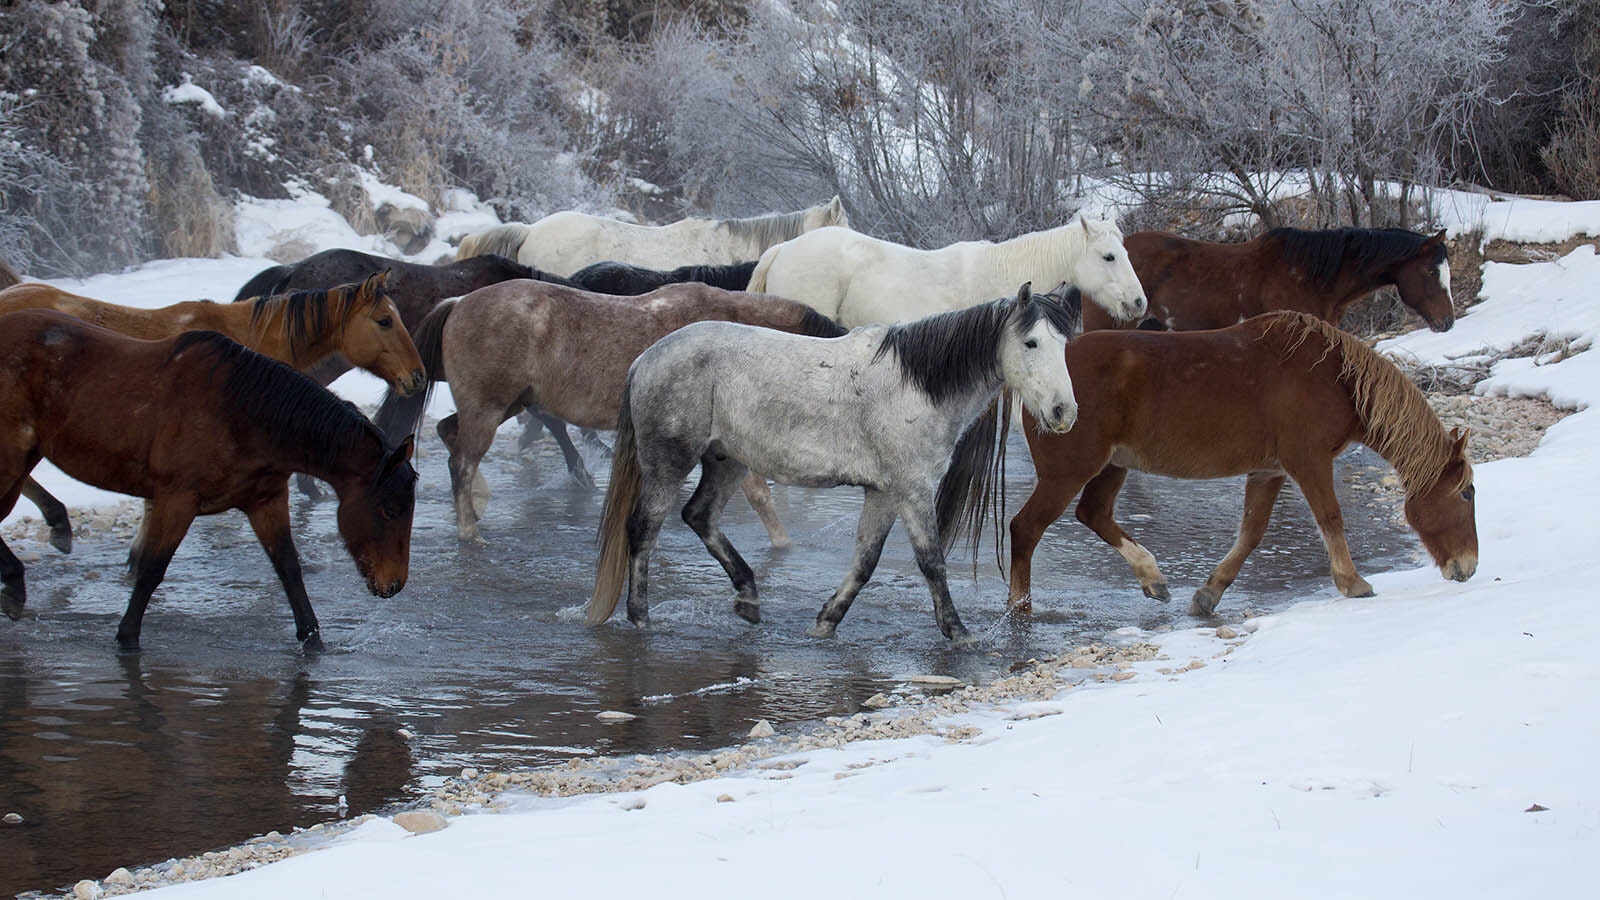 A herd of wild horses cross a stream in winter.